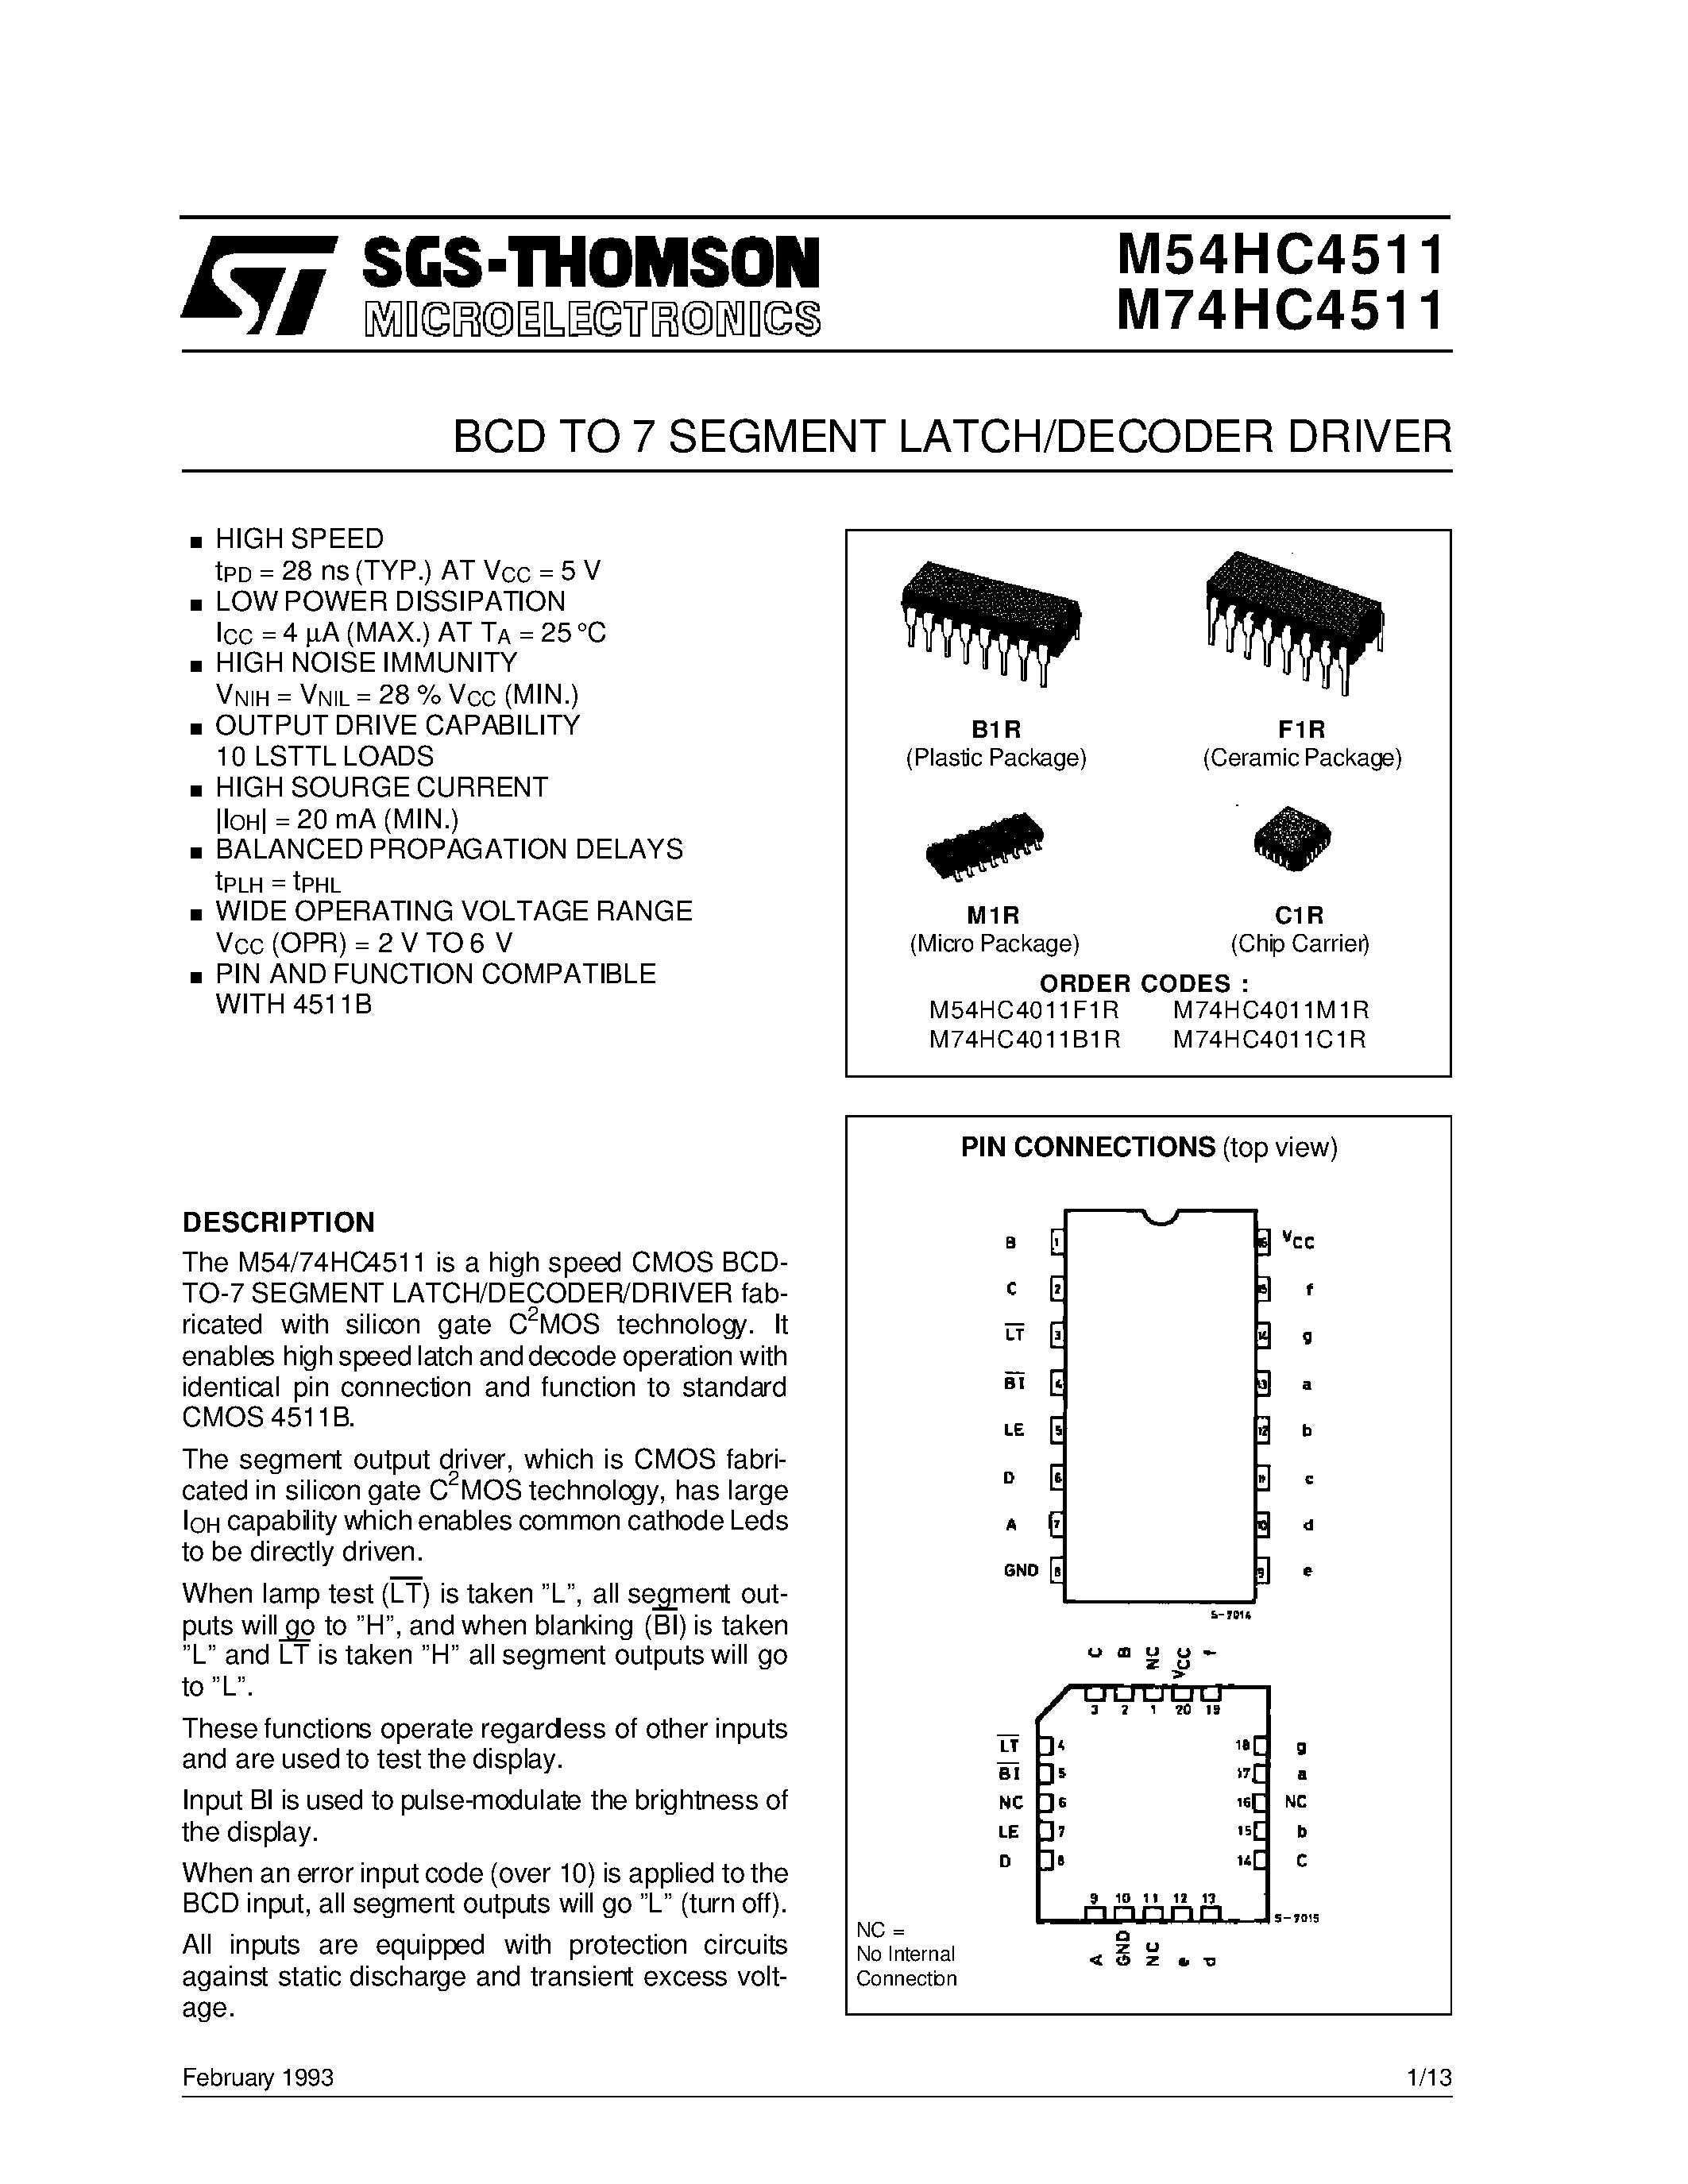 Datasheet M74HC4511 - BCD TO 7 SEGMENT LATCH/DECODER DRIVER page 1